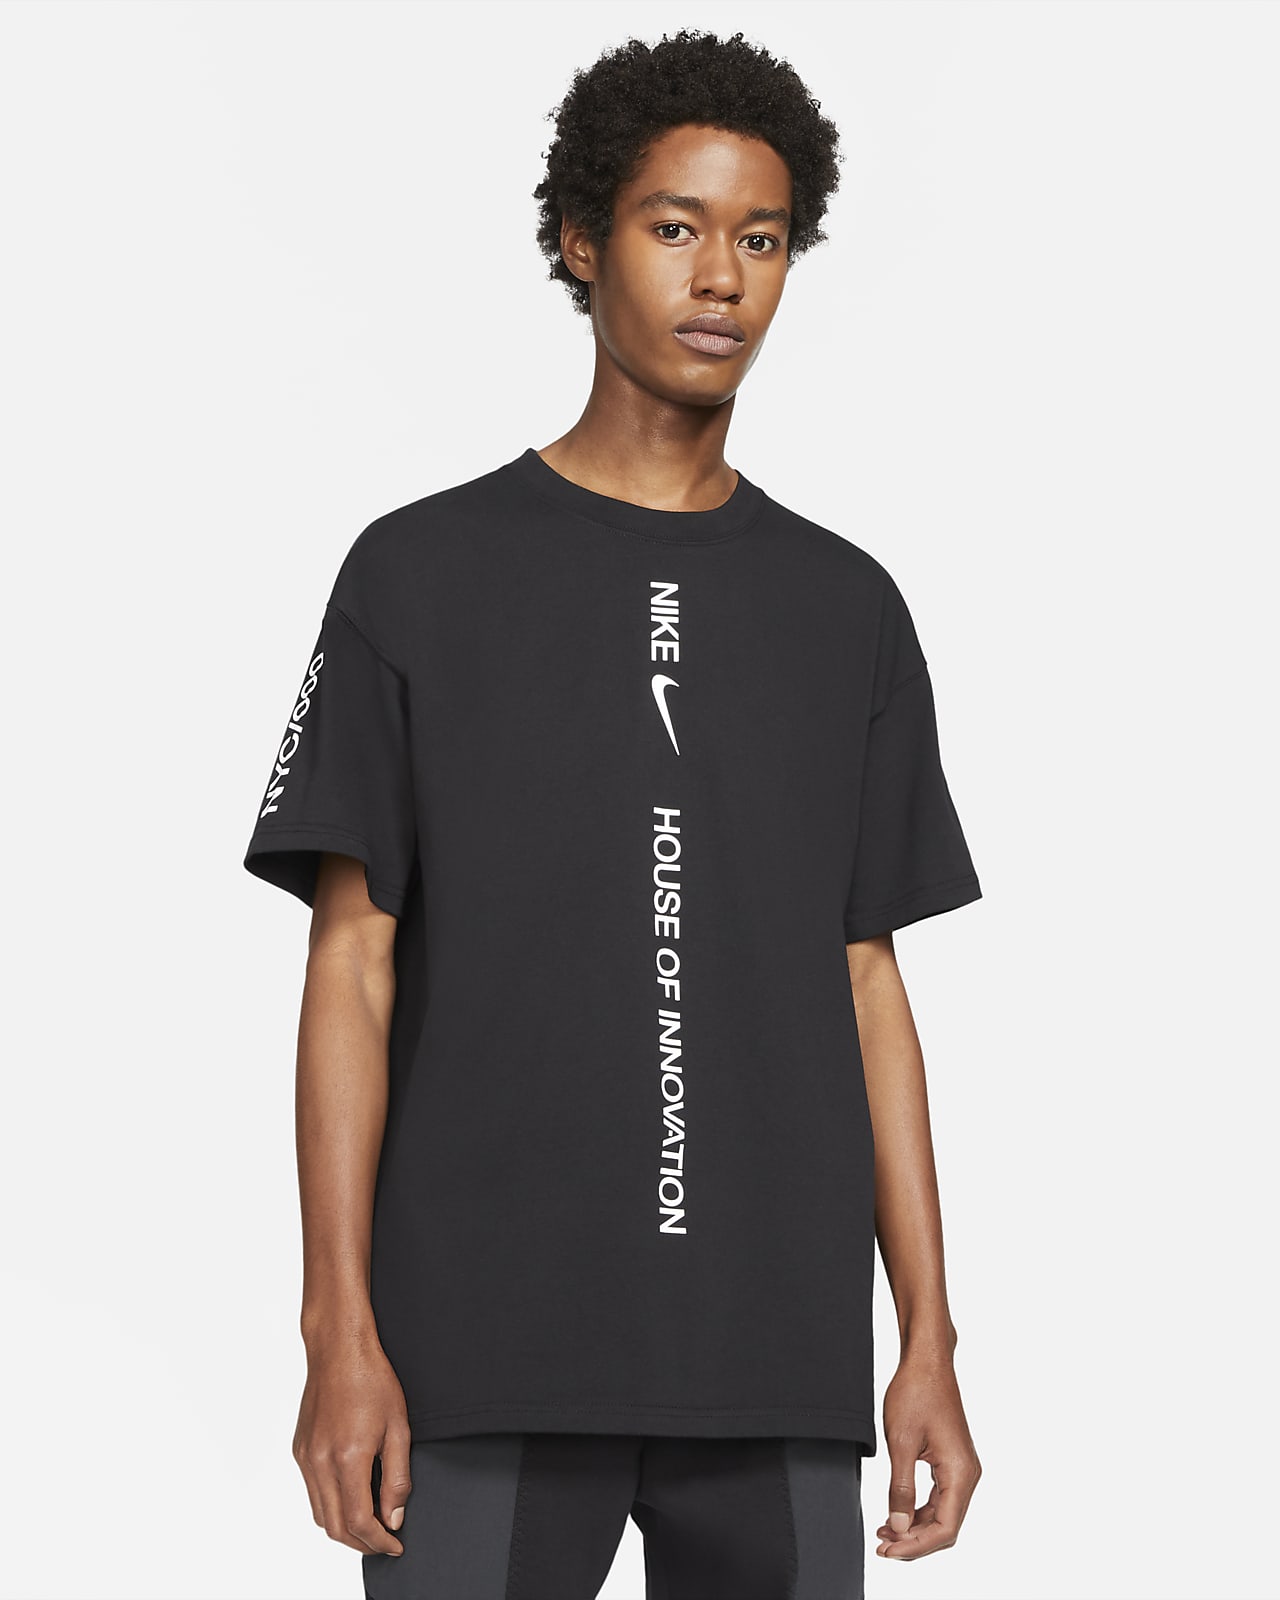 of Innovation (NYC) Men's T-Shirt. Nike 